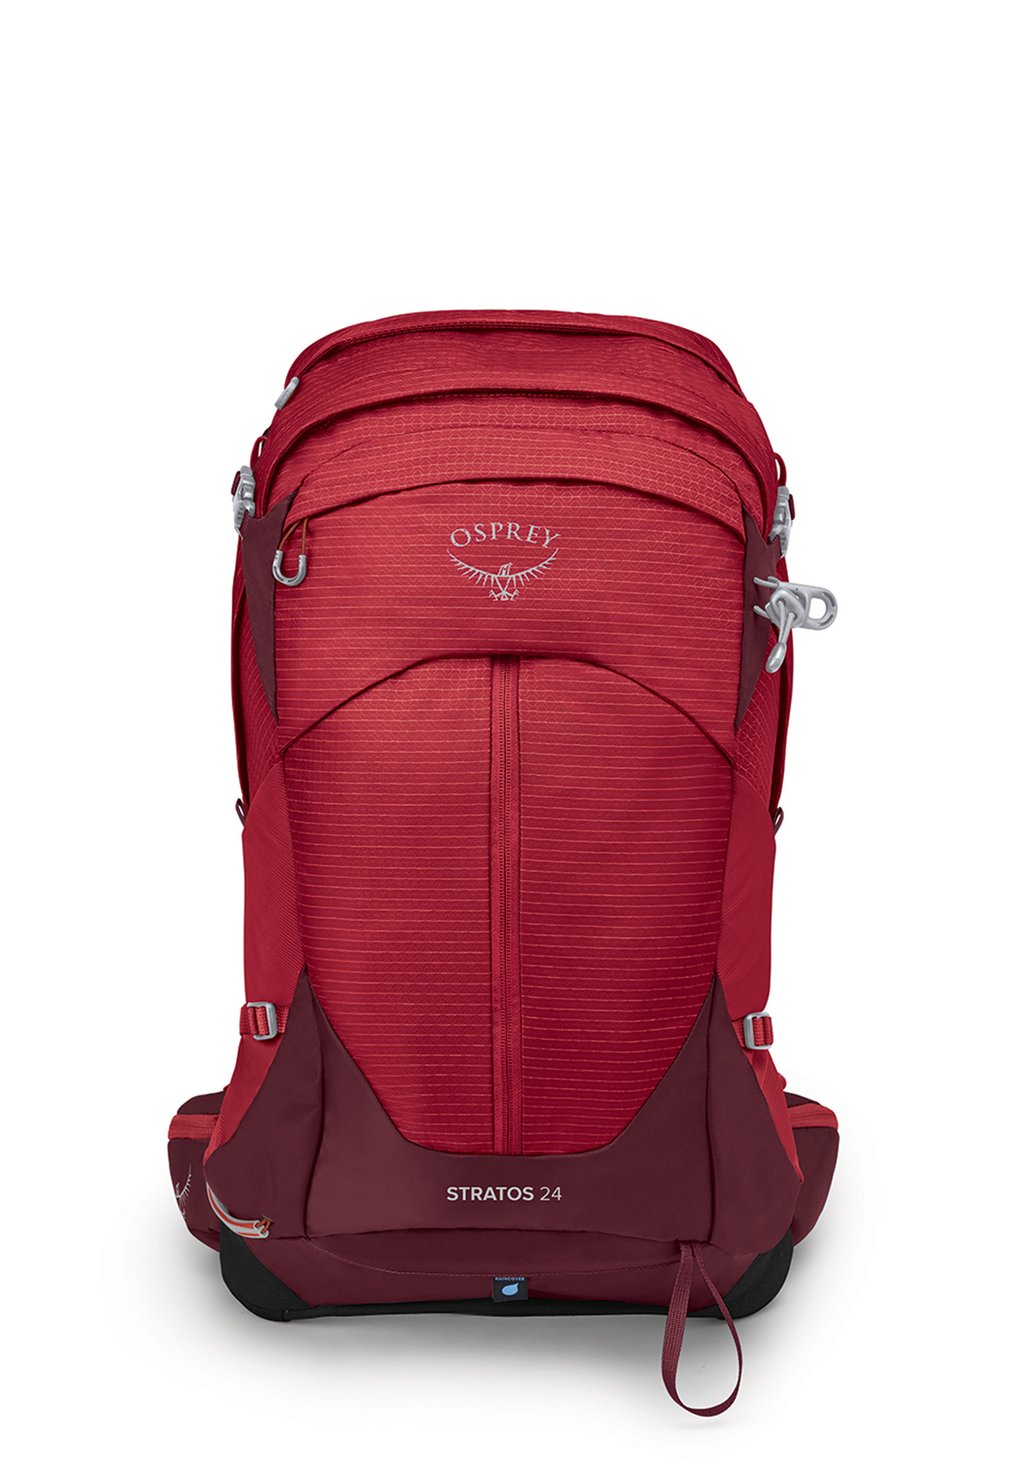 Треккинговый рюкзак STRATOS Osprey, цвет poinsettia red цена и фото